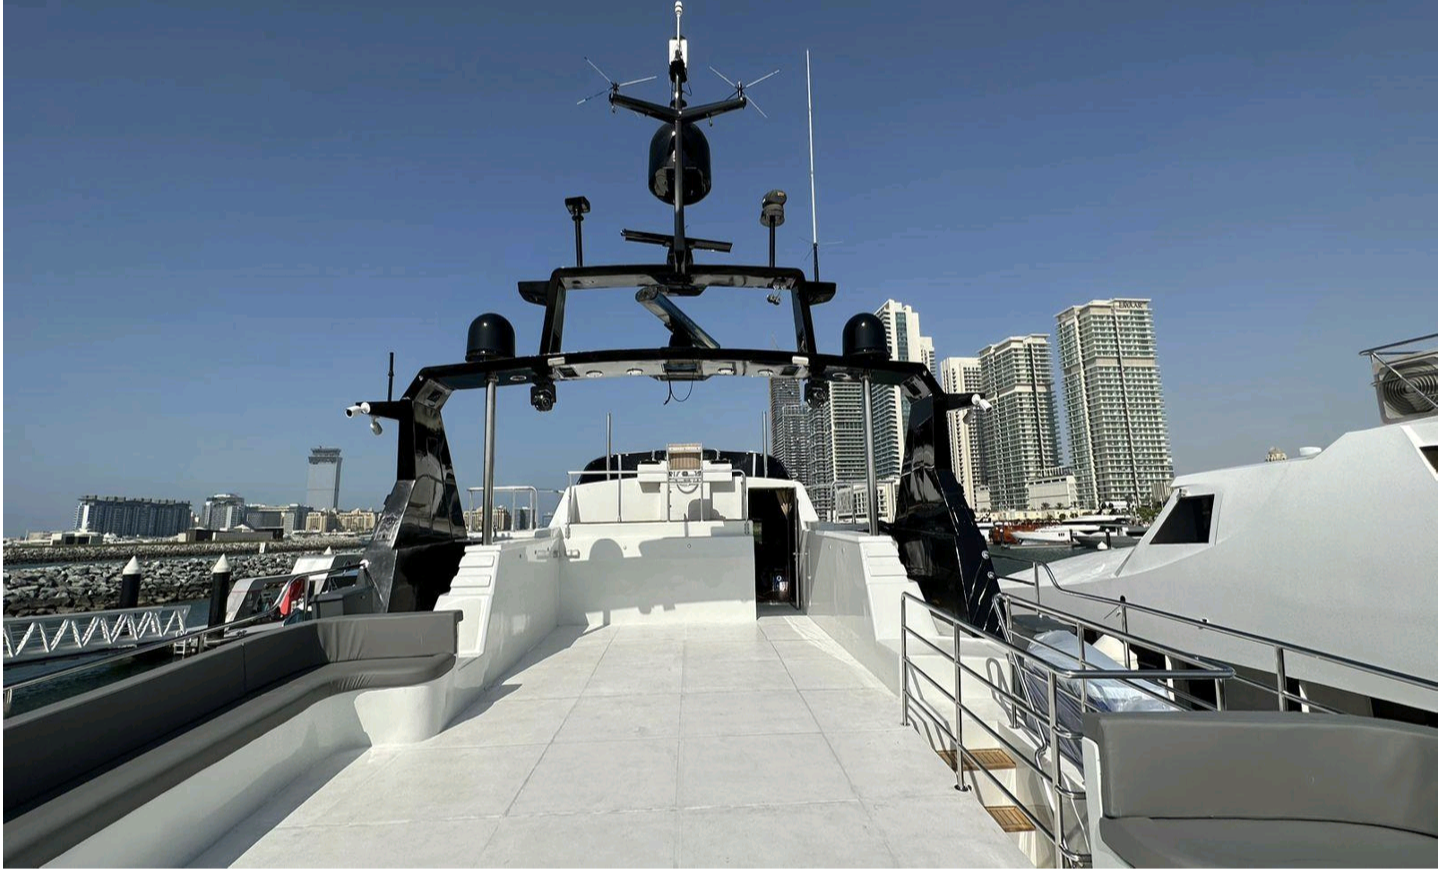 Mazayel 135ft Mega Yacht, 100pax - Dubai Harbour Yacht Charter, Yacht Party Dubai